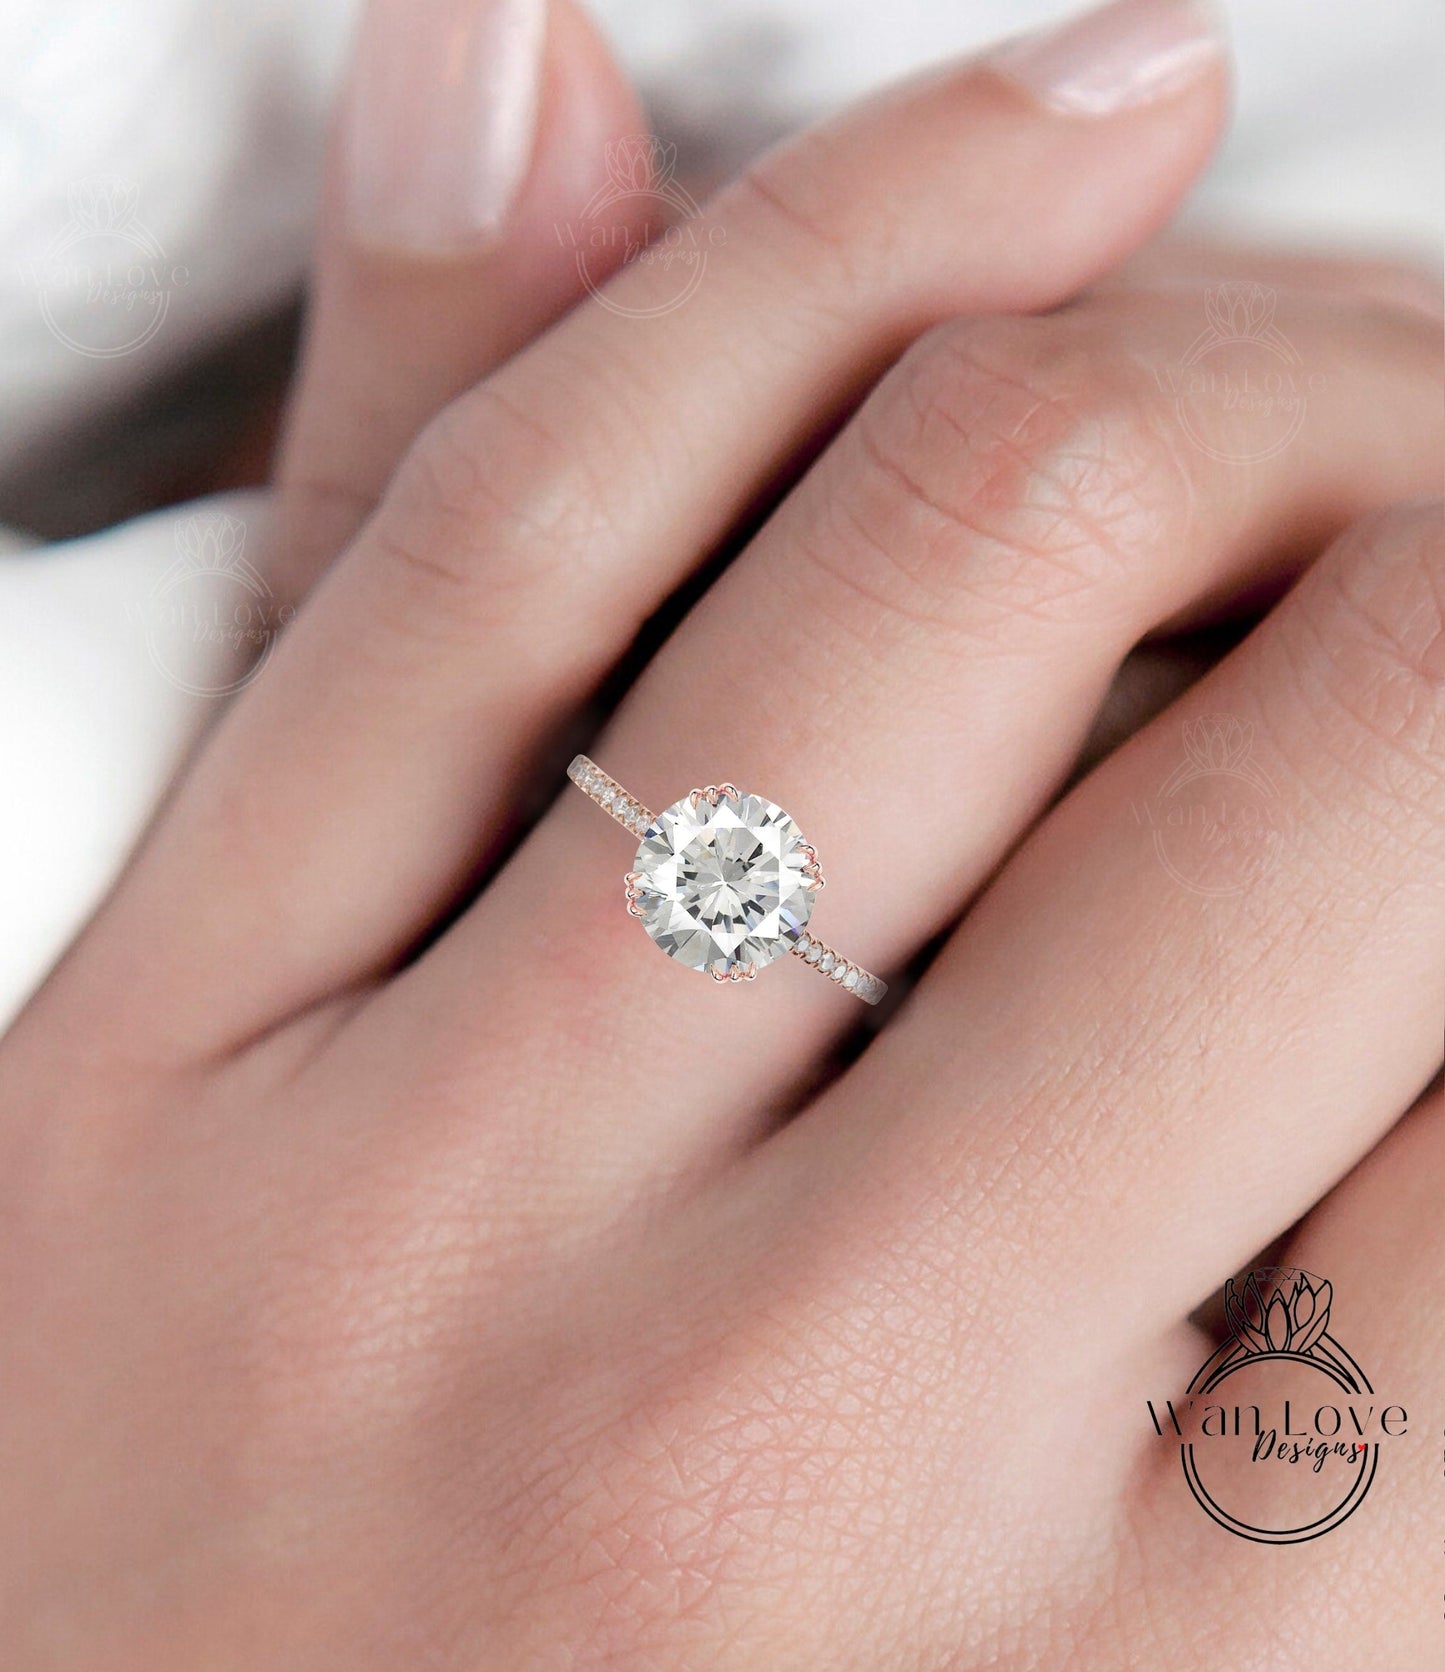 Diamond Engagement Ring 3 triple fishtail prongs ring half eternity ring rose gold lab diamond round Bridal Anniversary promise Ring gift Wan Love Designs